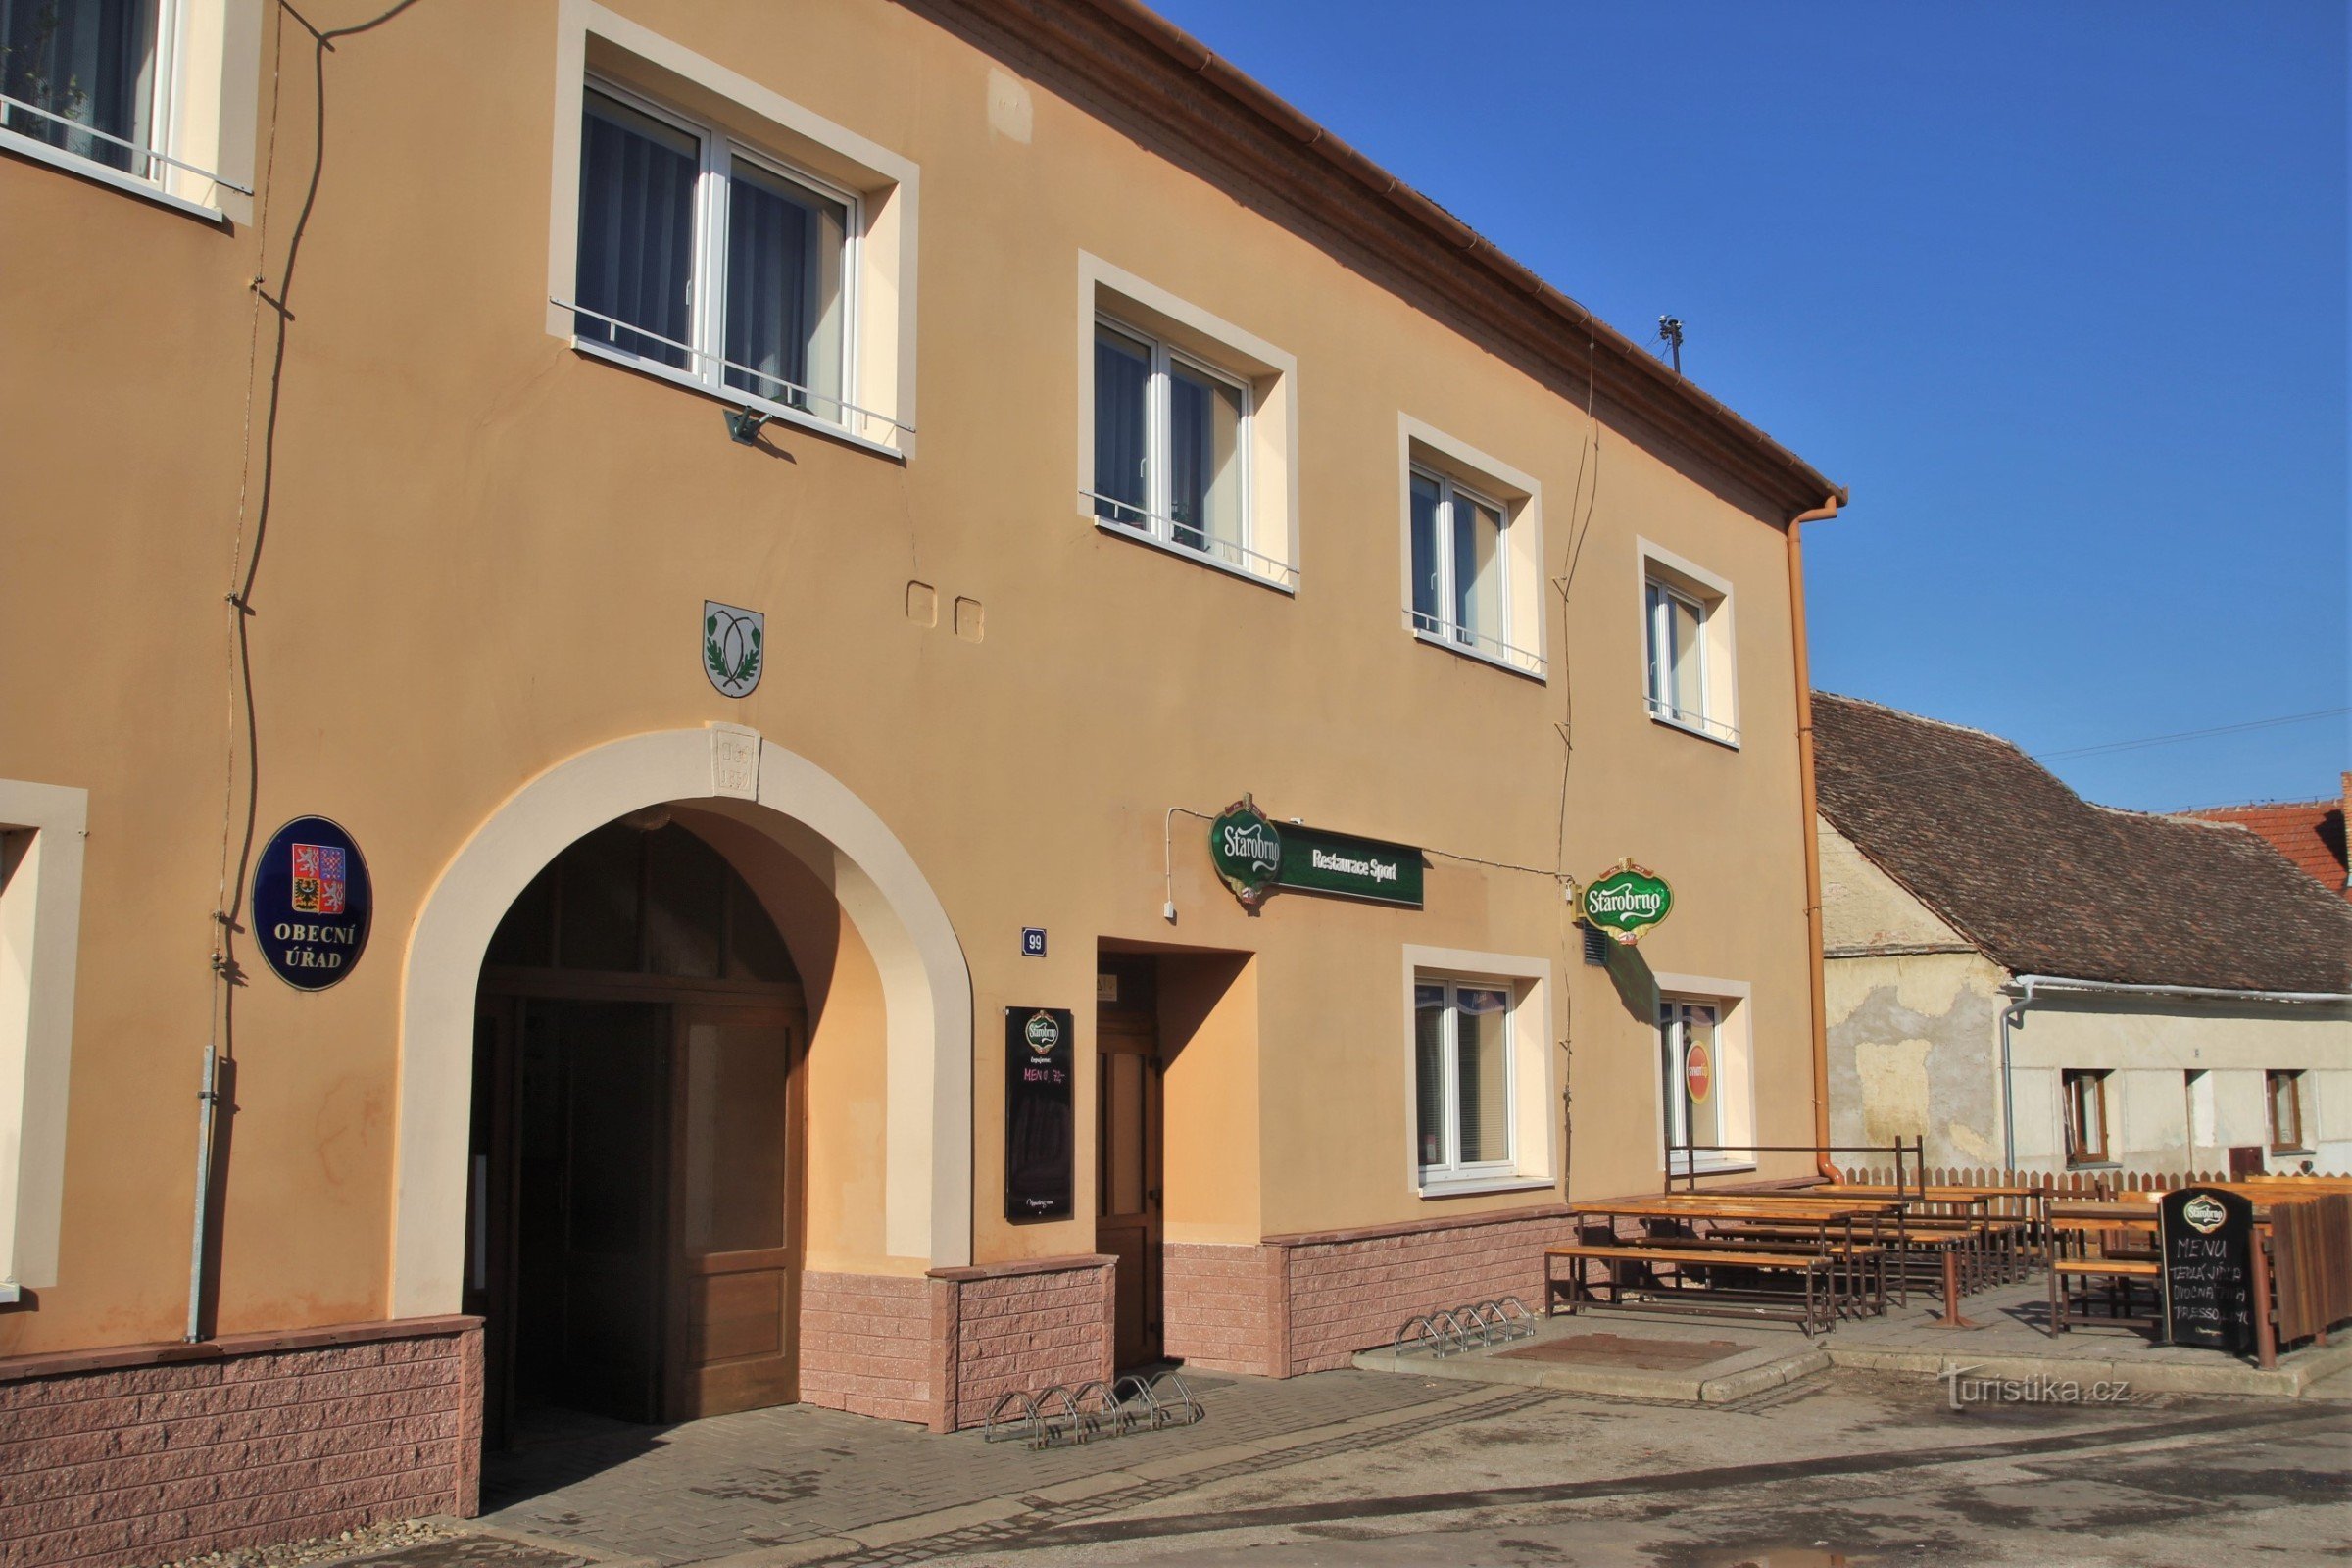 Pouzdřany - općinski ured i gostionica u selu